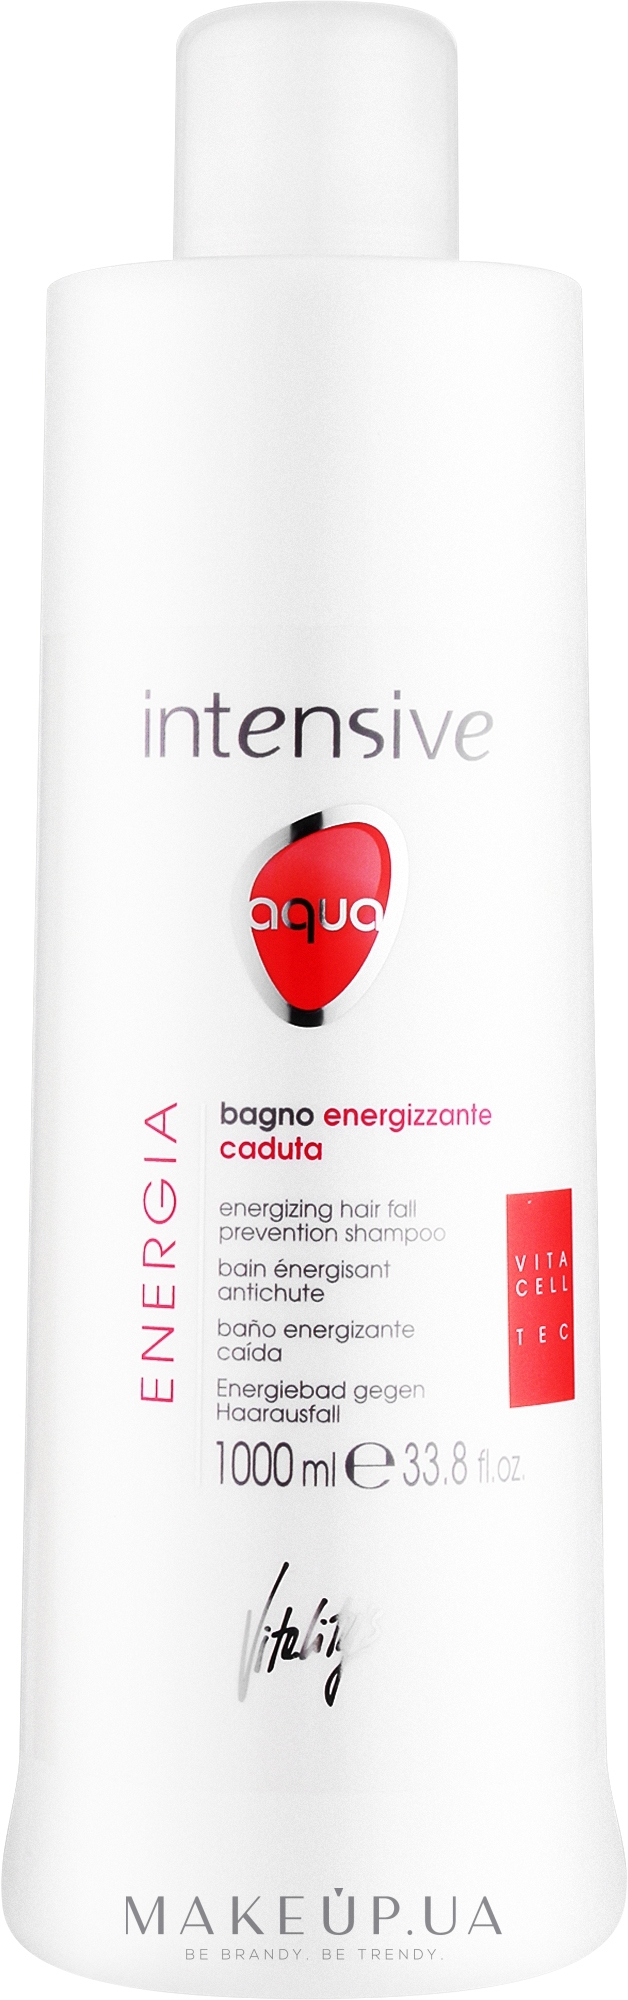 Шампунь против выпадения волос - Vitality's Intensive Aqua Energy Shampoo — фото 1000ml